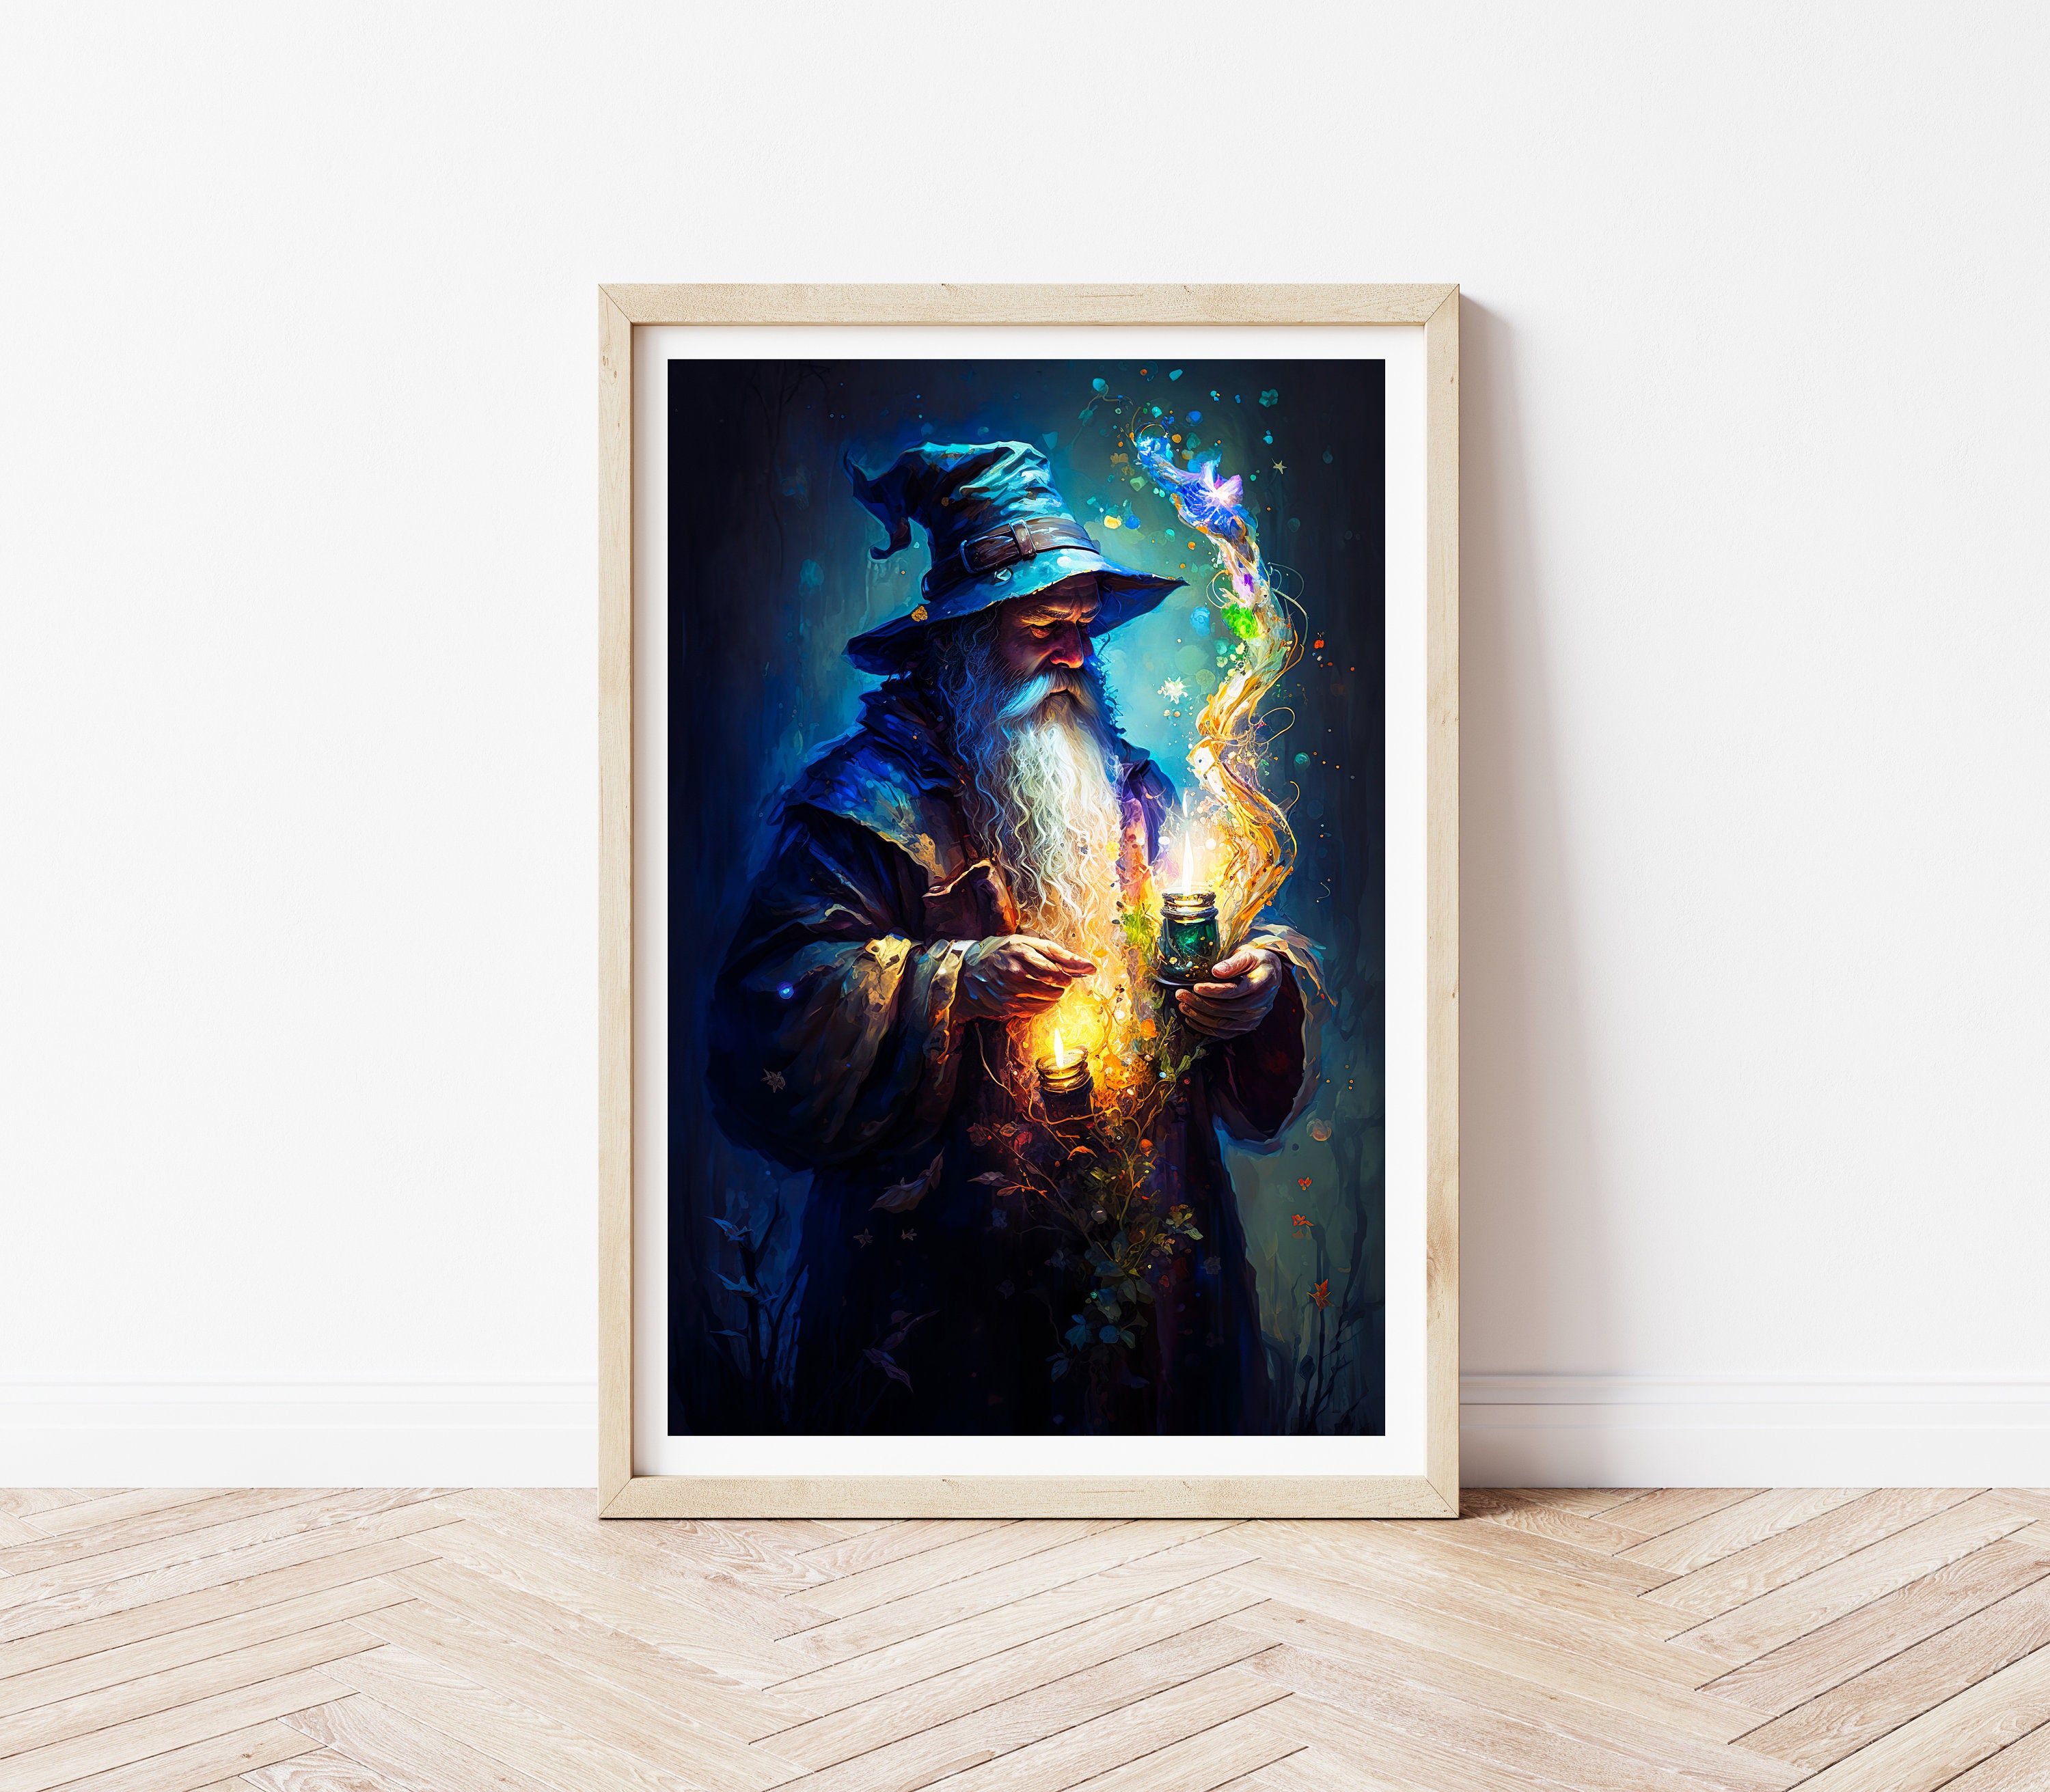 Fairy Tale Wizard - Dynamix Design Shop - Digital Art, Fantasy & Mythology,  Magical, Wizards & Witches - ArtPal